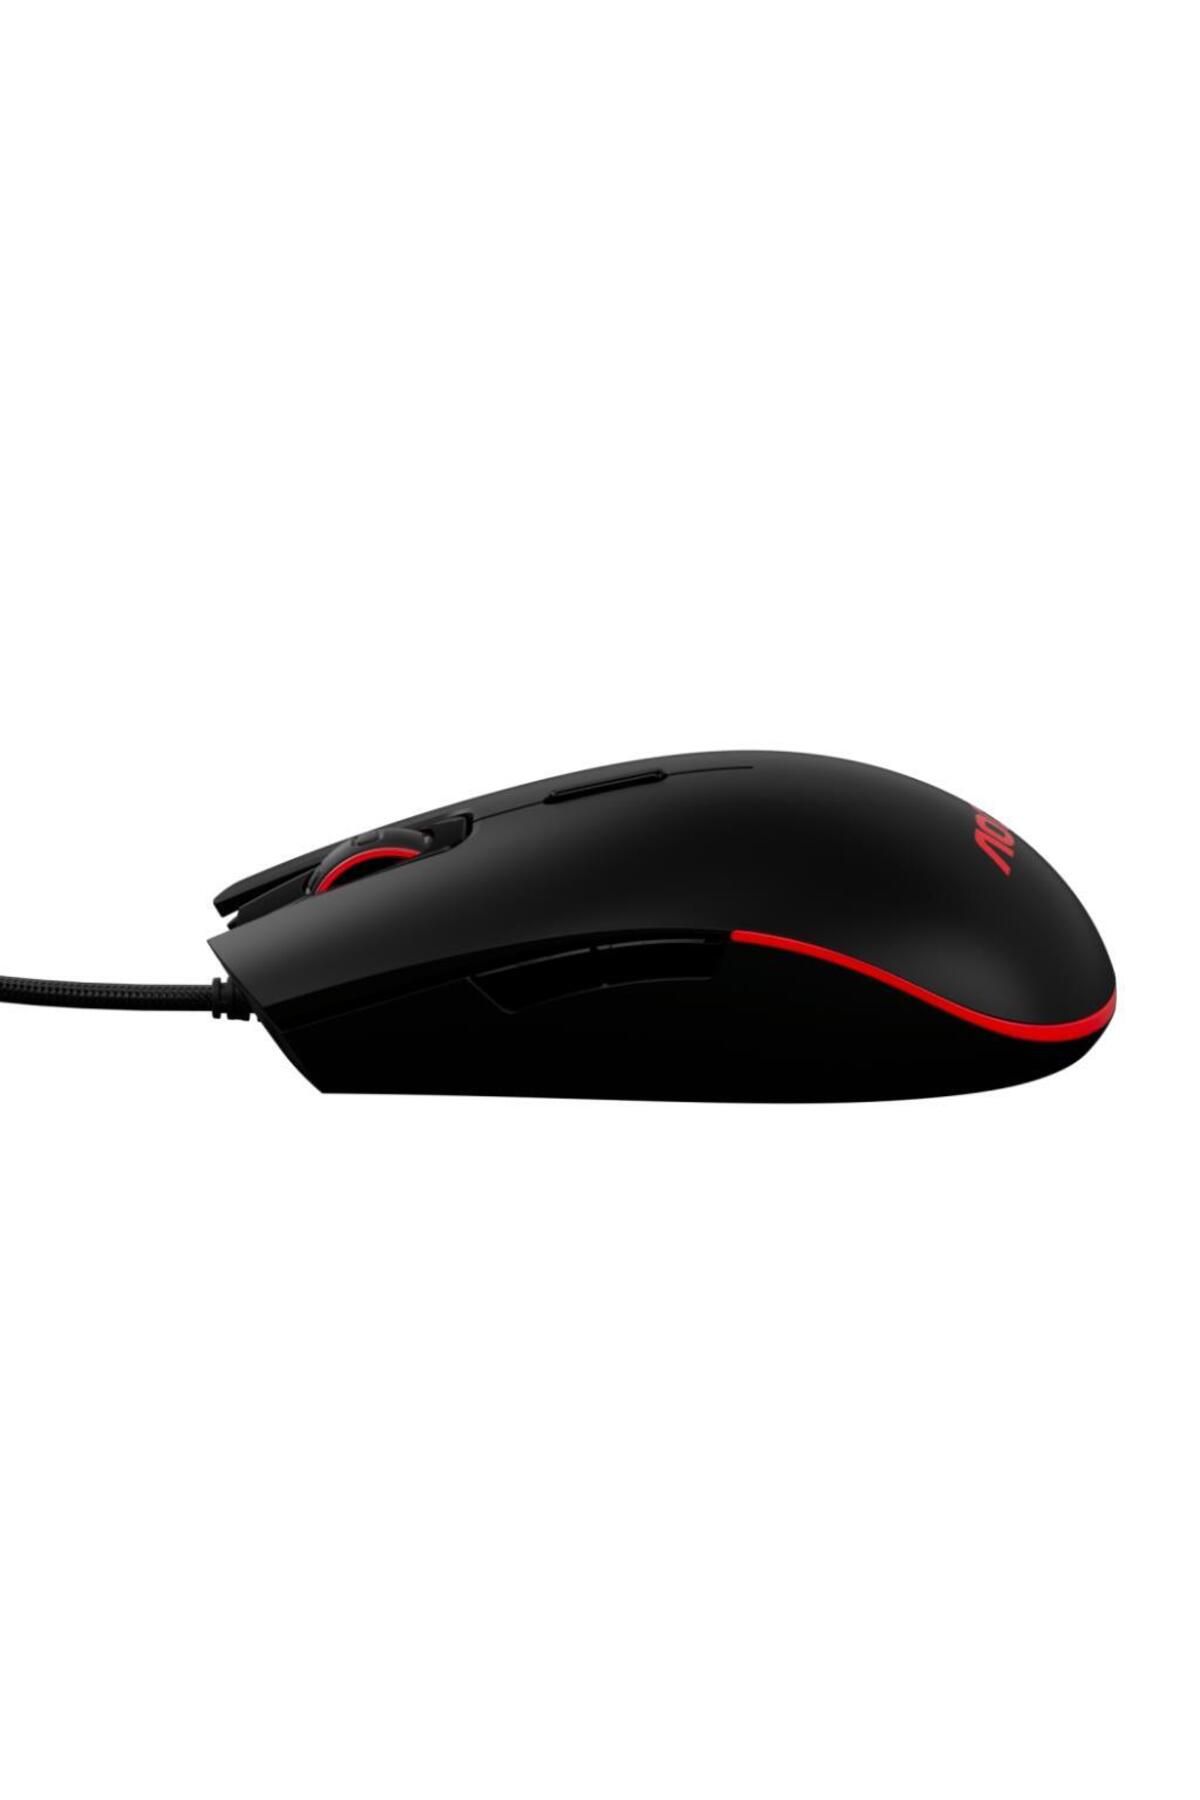 AOC Gm500 Rgb Gaming Mouse (GM500DRBE)